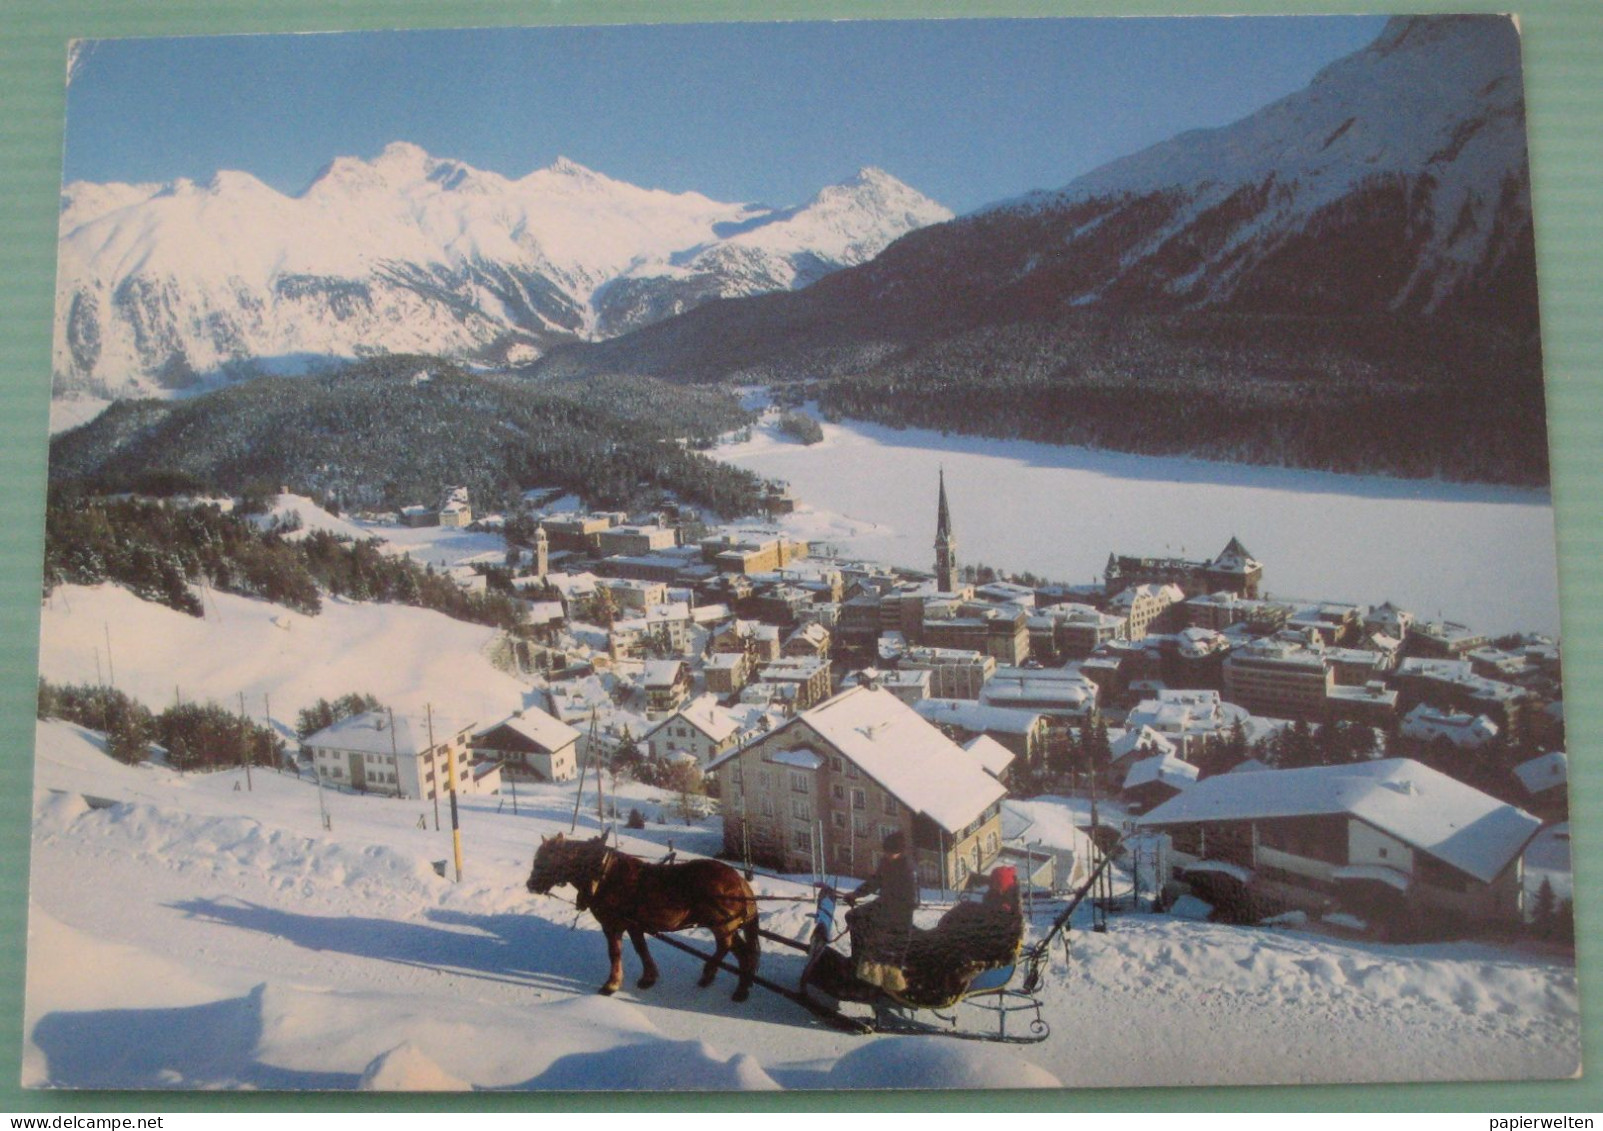 St. Moritz (GR) - Winter Pferdekutschenfahrt - St. Moritz